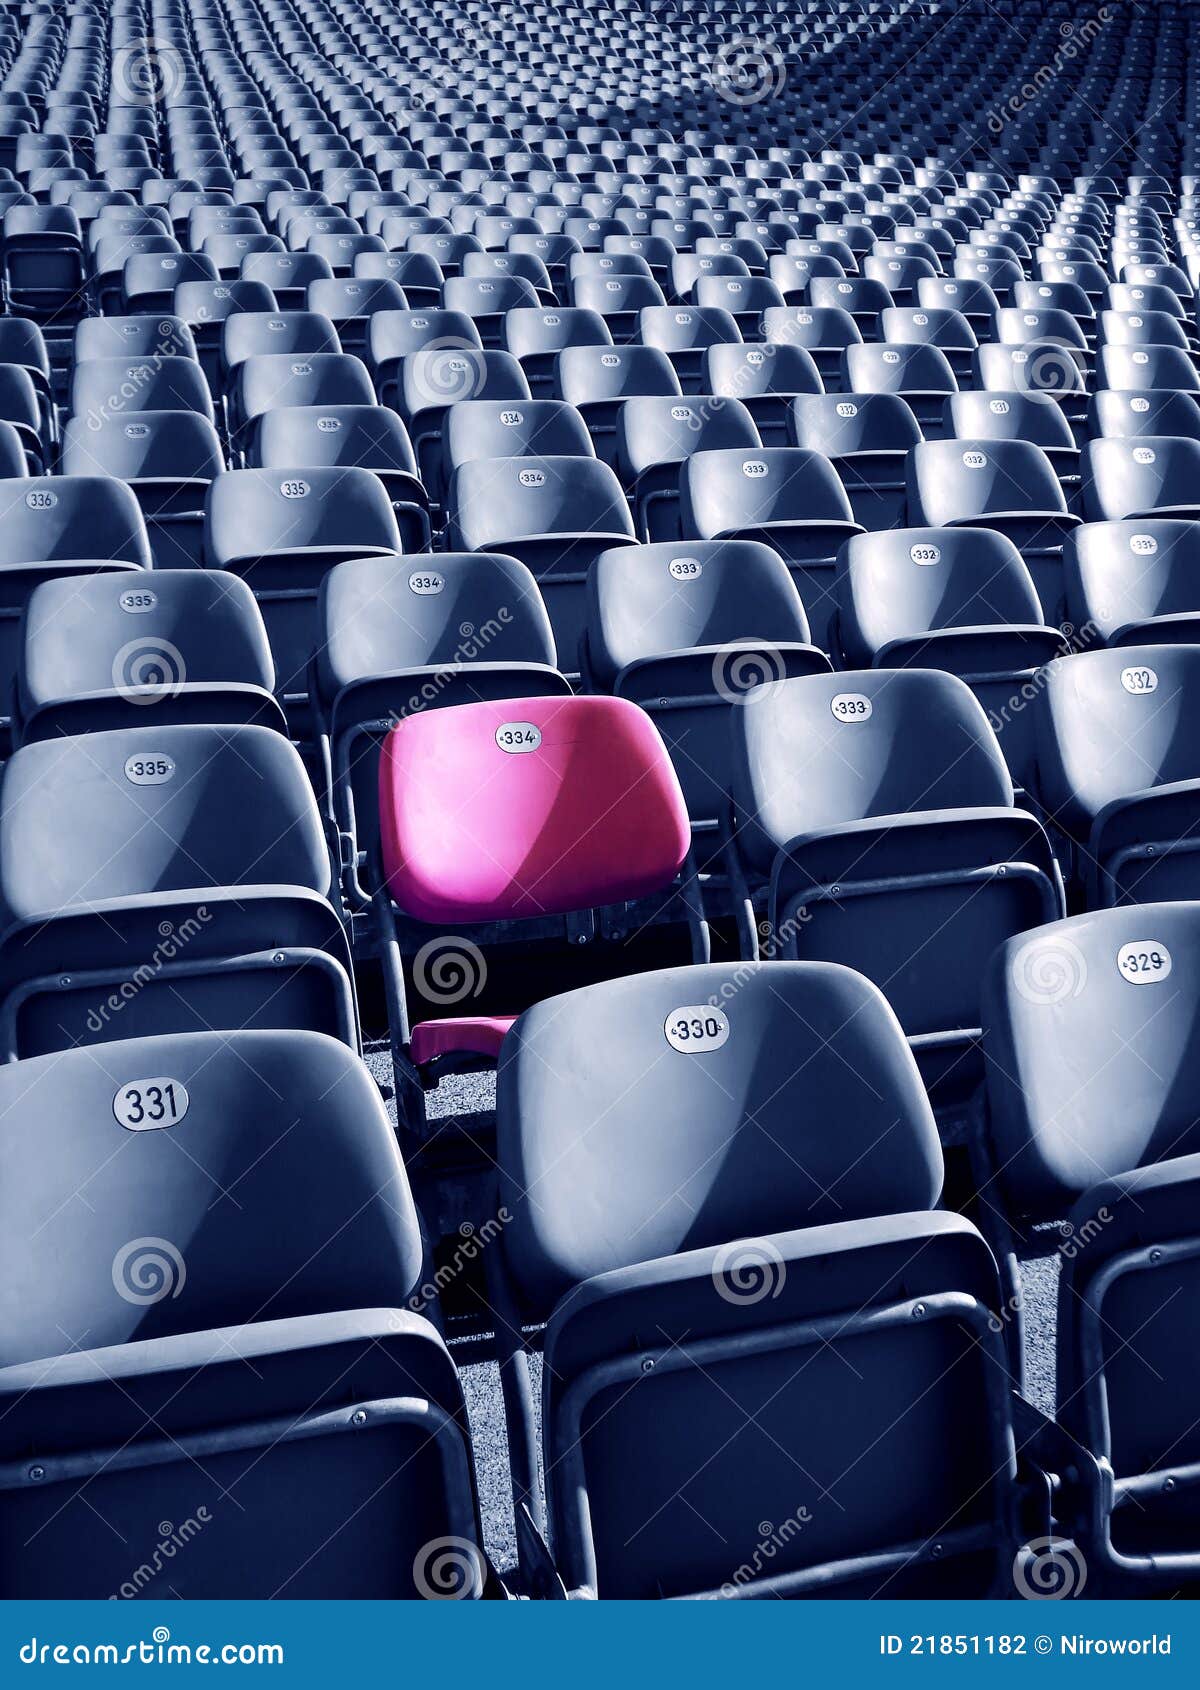 Unique Stadium Seat stock photo. Image of audience, business - 21851182